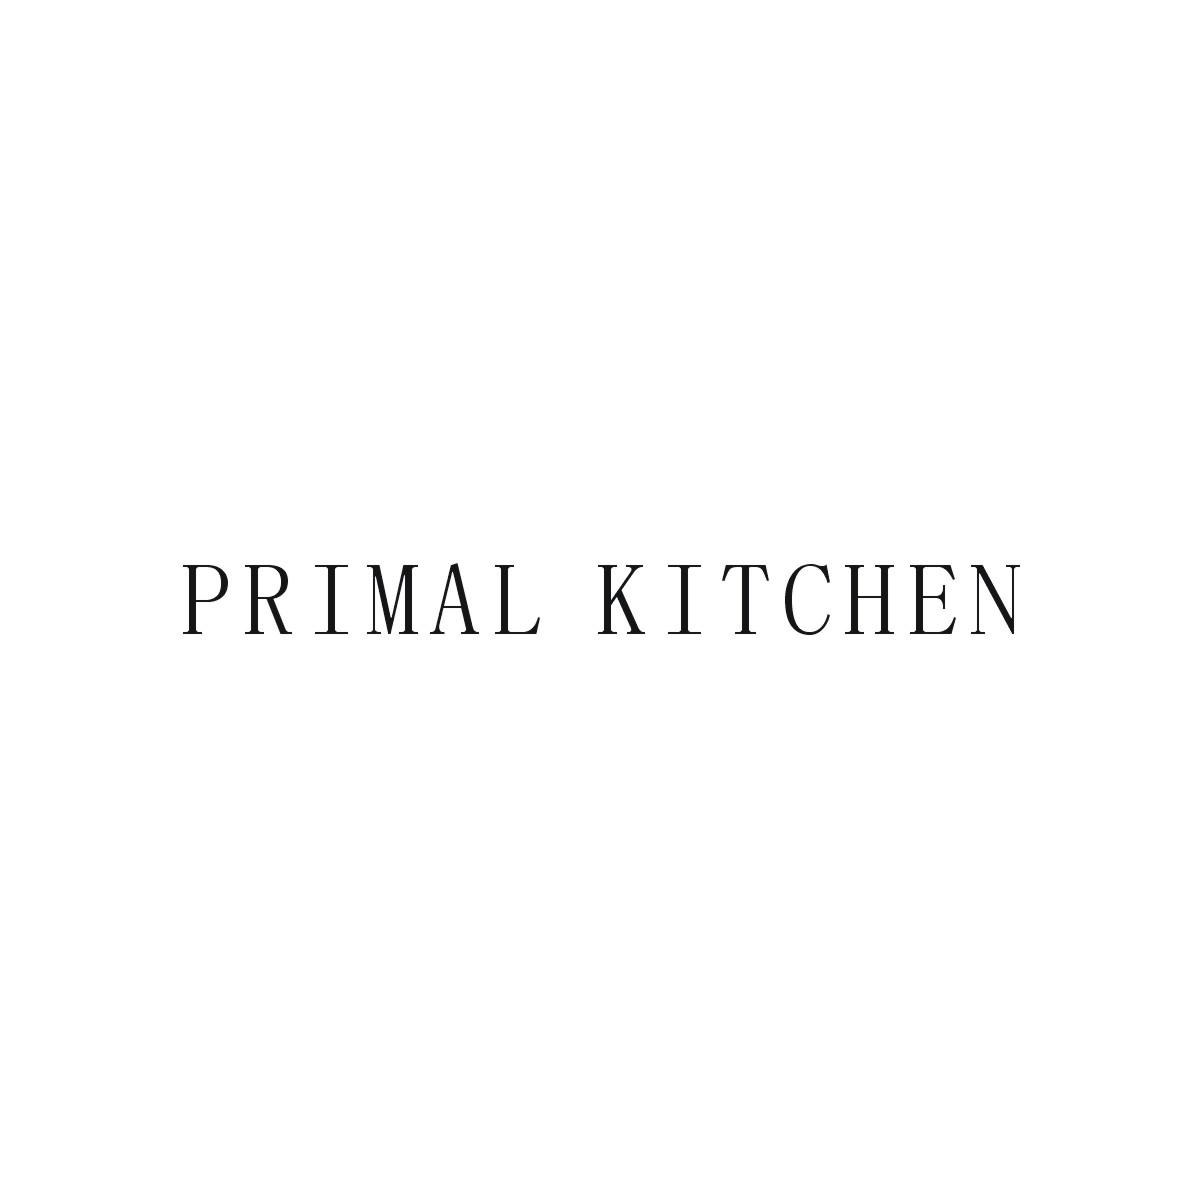 PRIMAL KITCHEN酱油防腐粉商标转让费用买卖交易流程